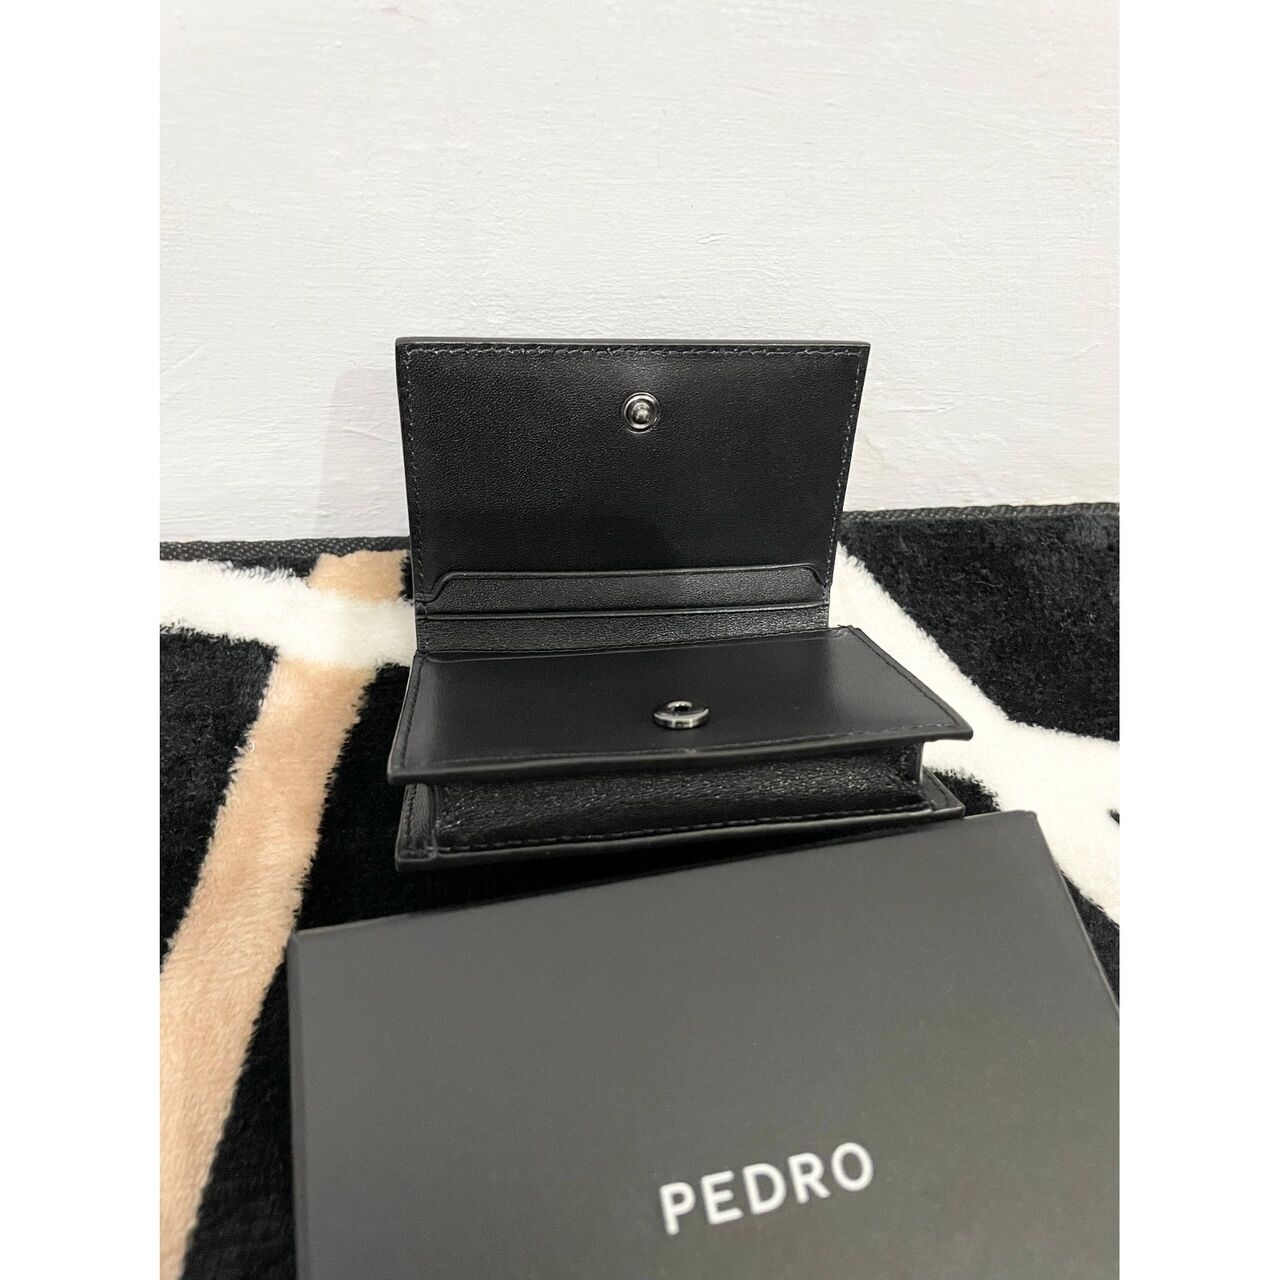 Pedro Black Wallet